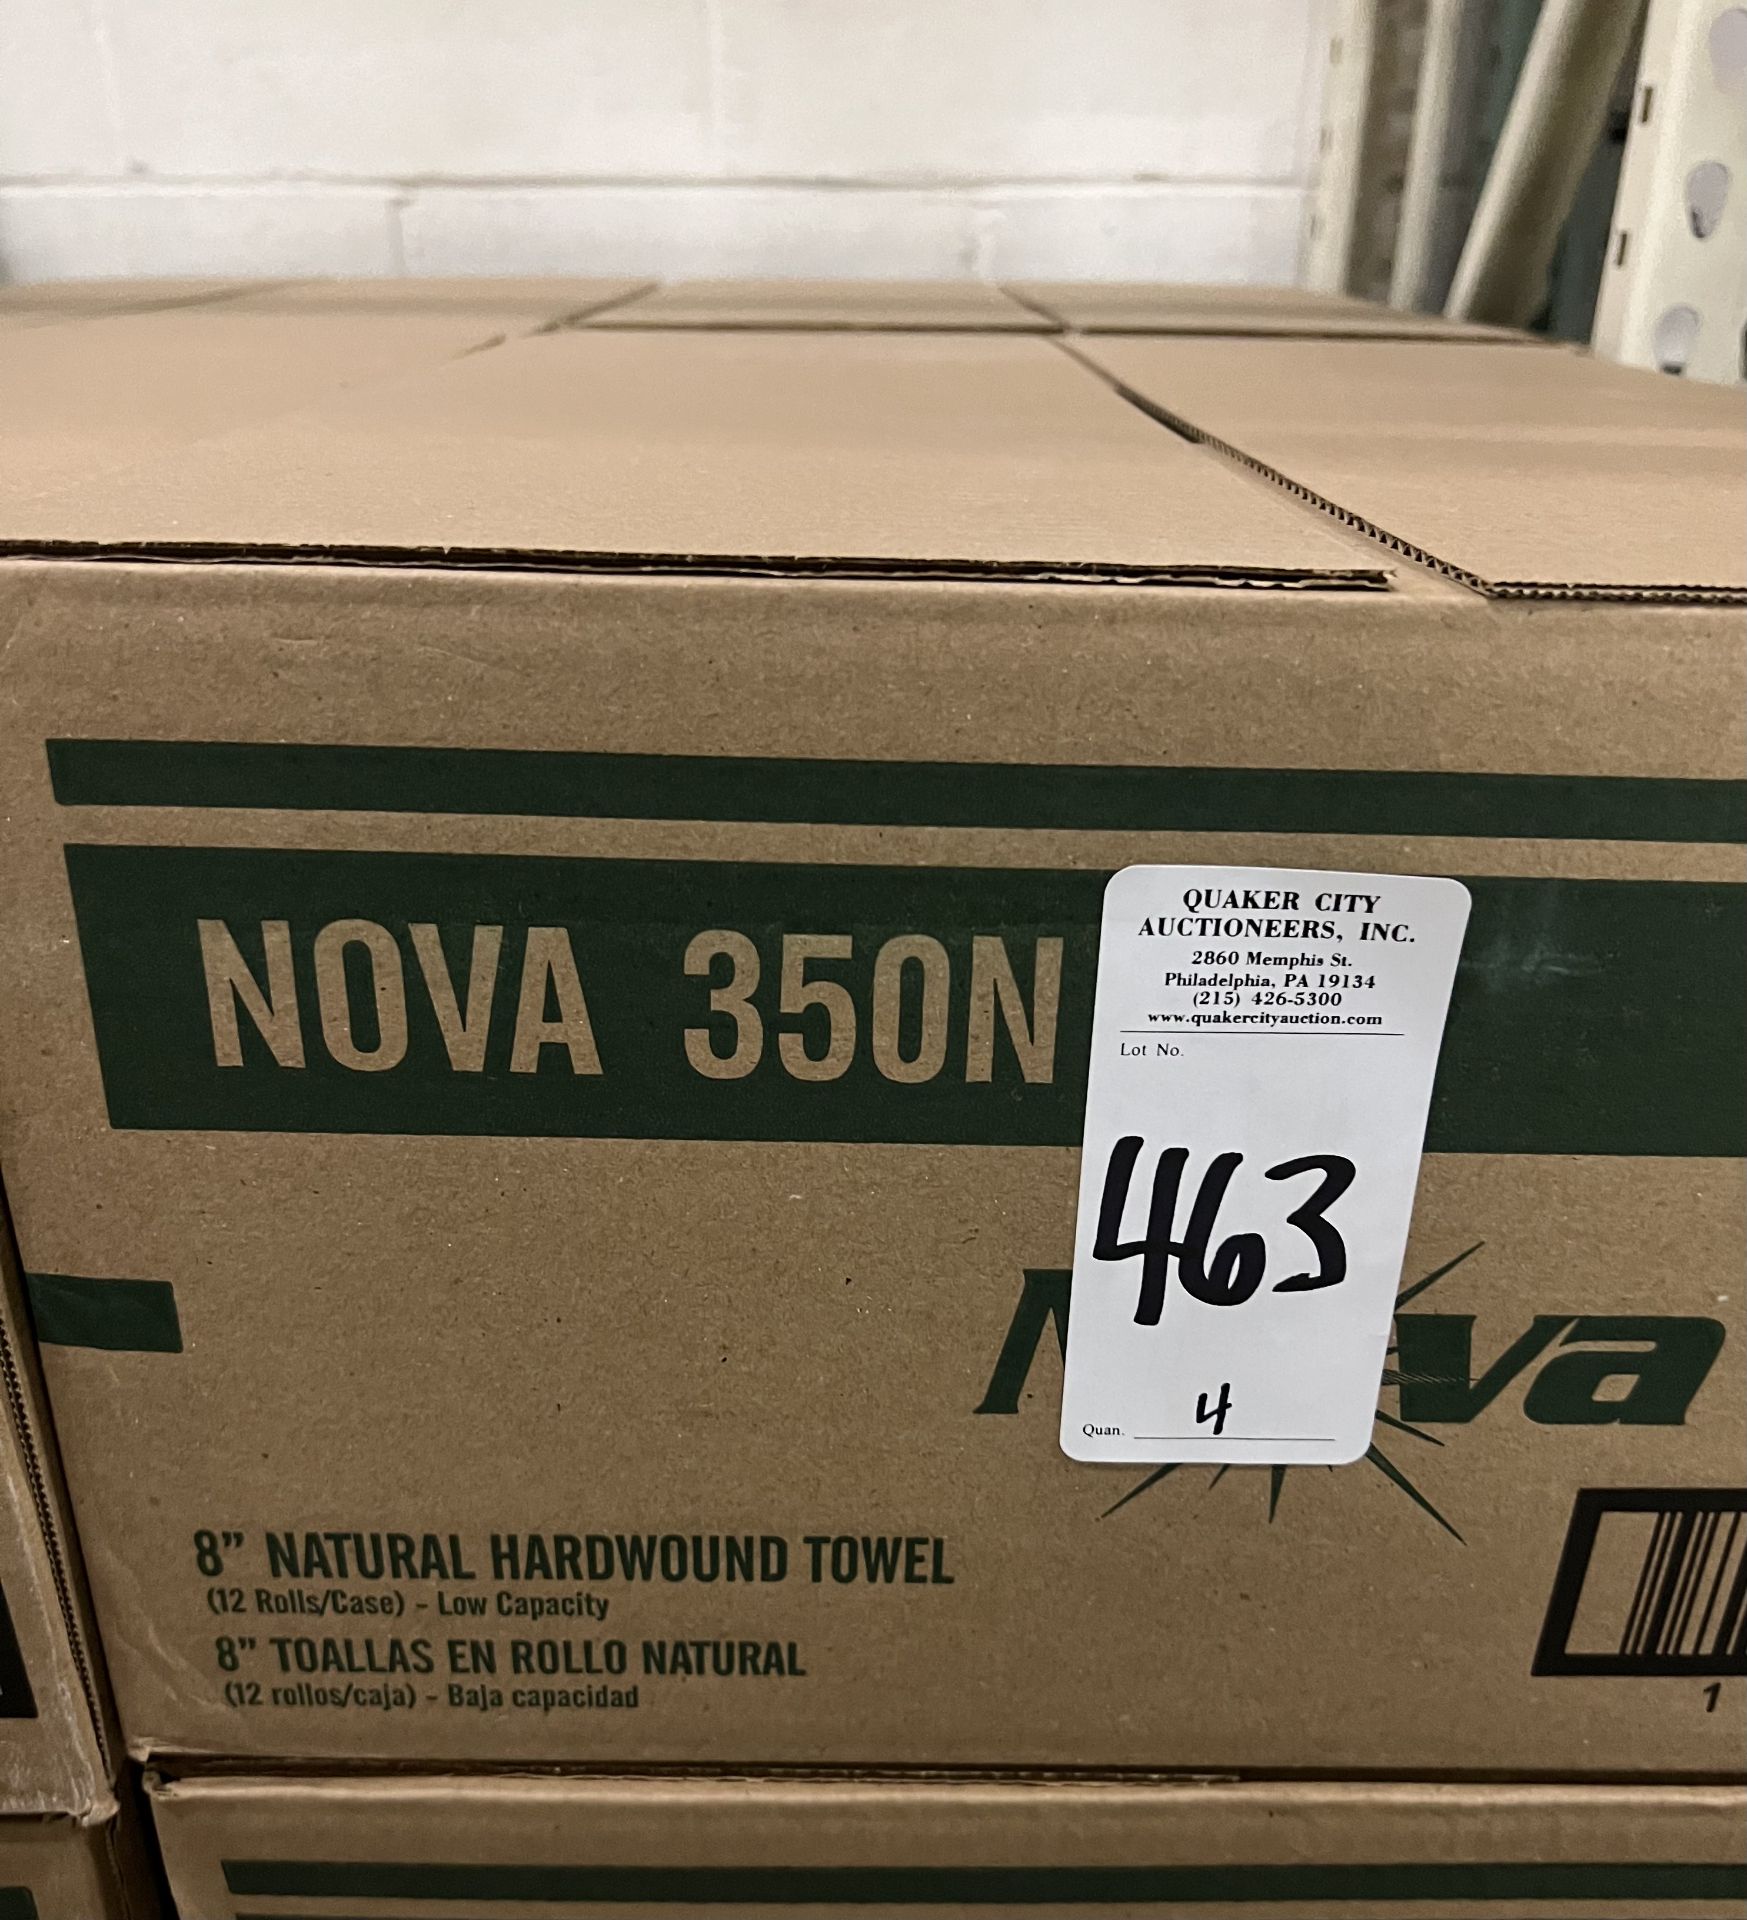 (4) CASES NOVA 350N 8 IN. NATURAL HARDWOUND TOWELS, 12 TOWELS CASE